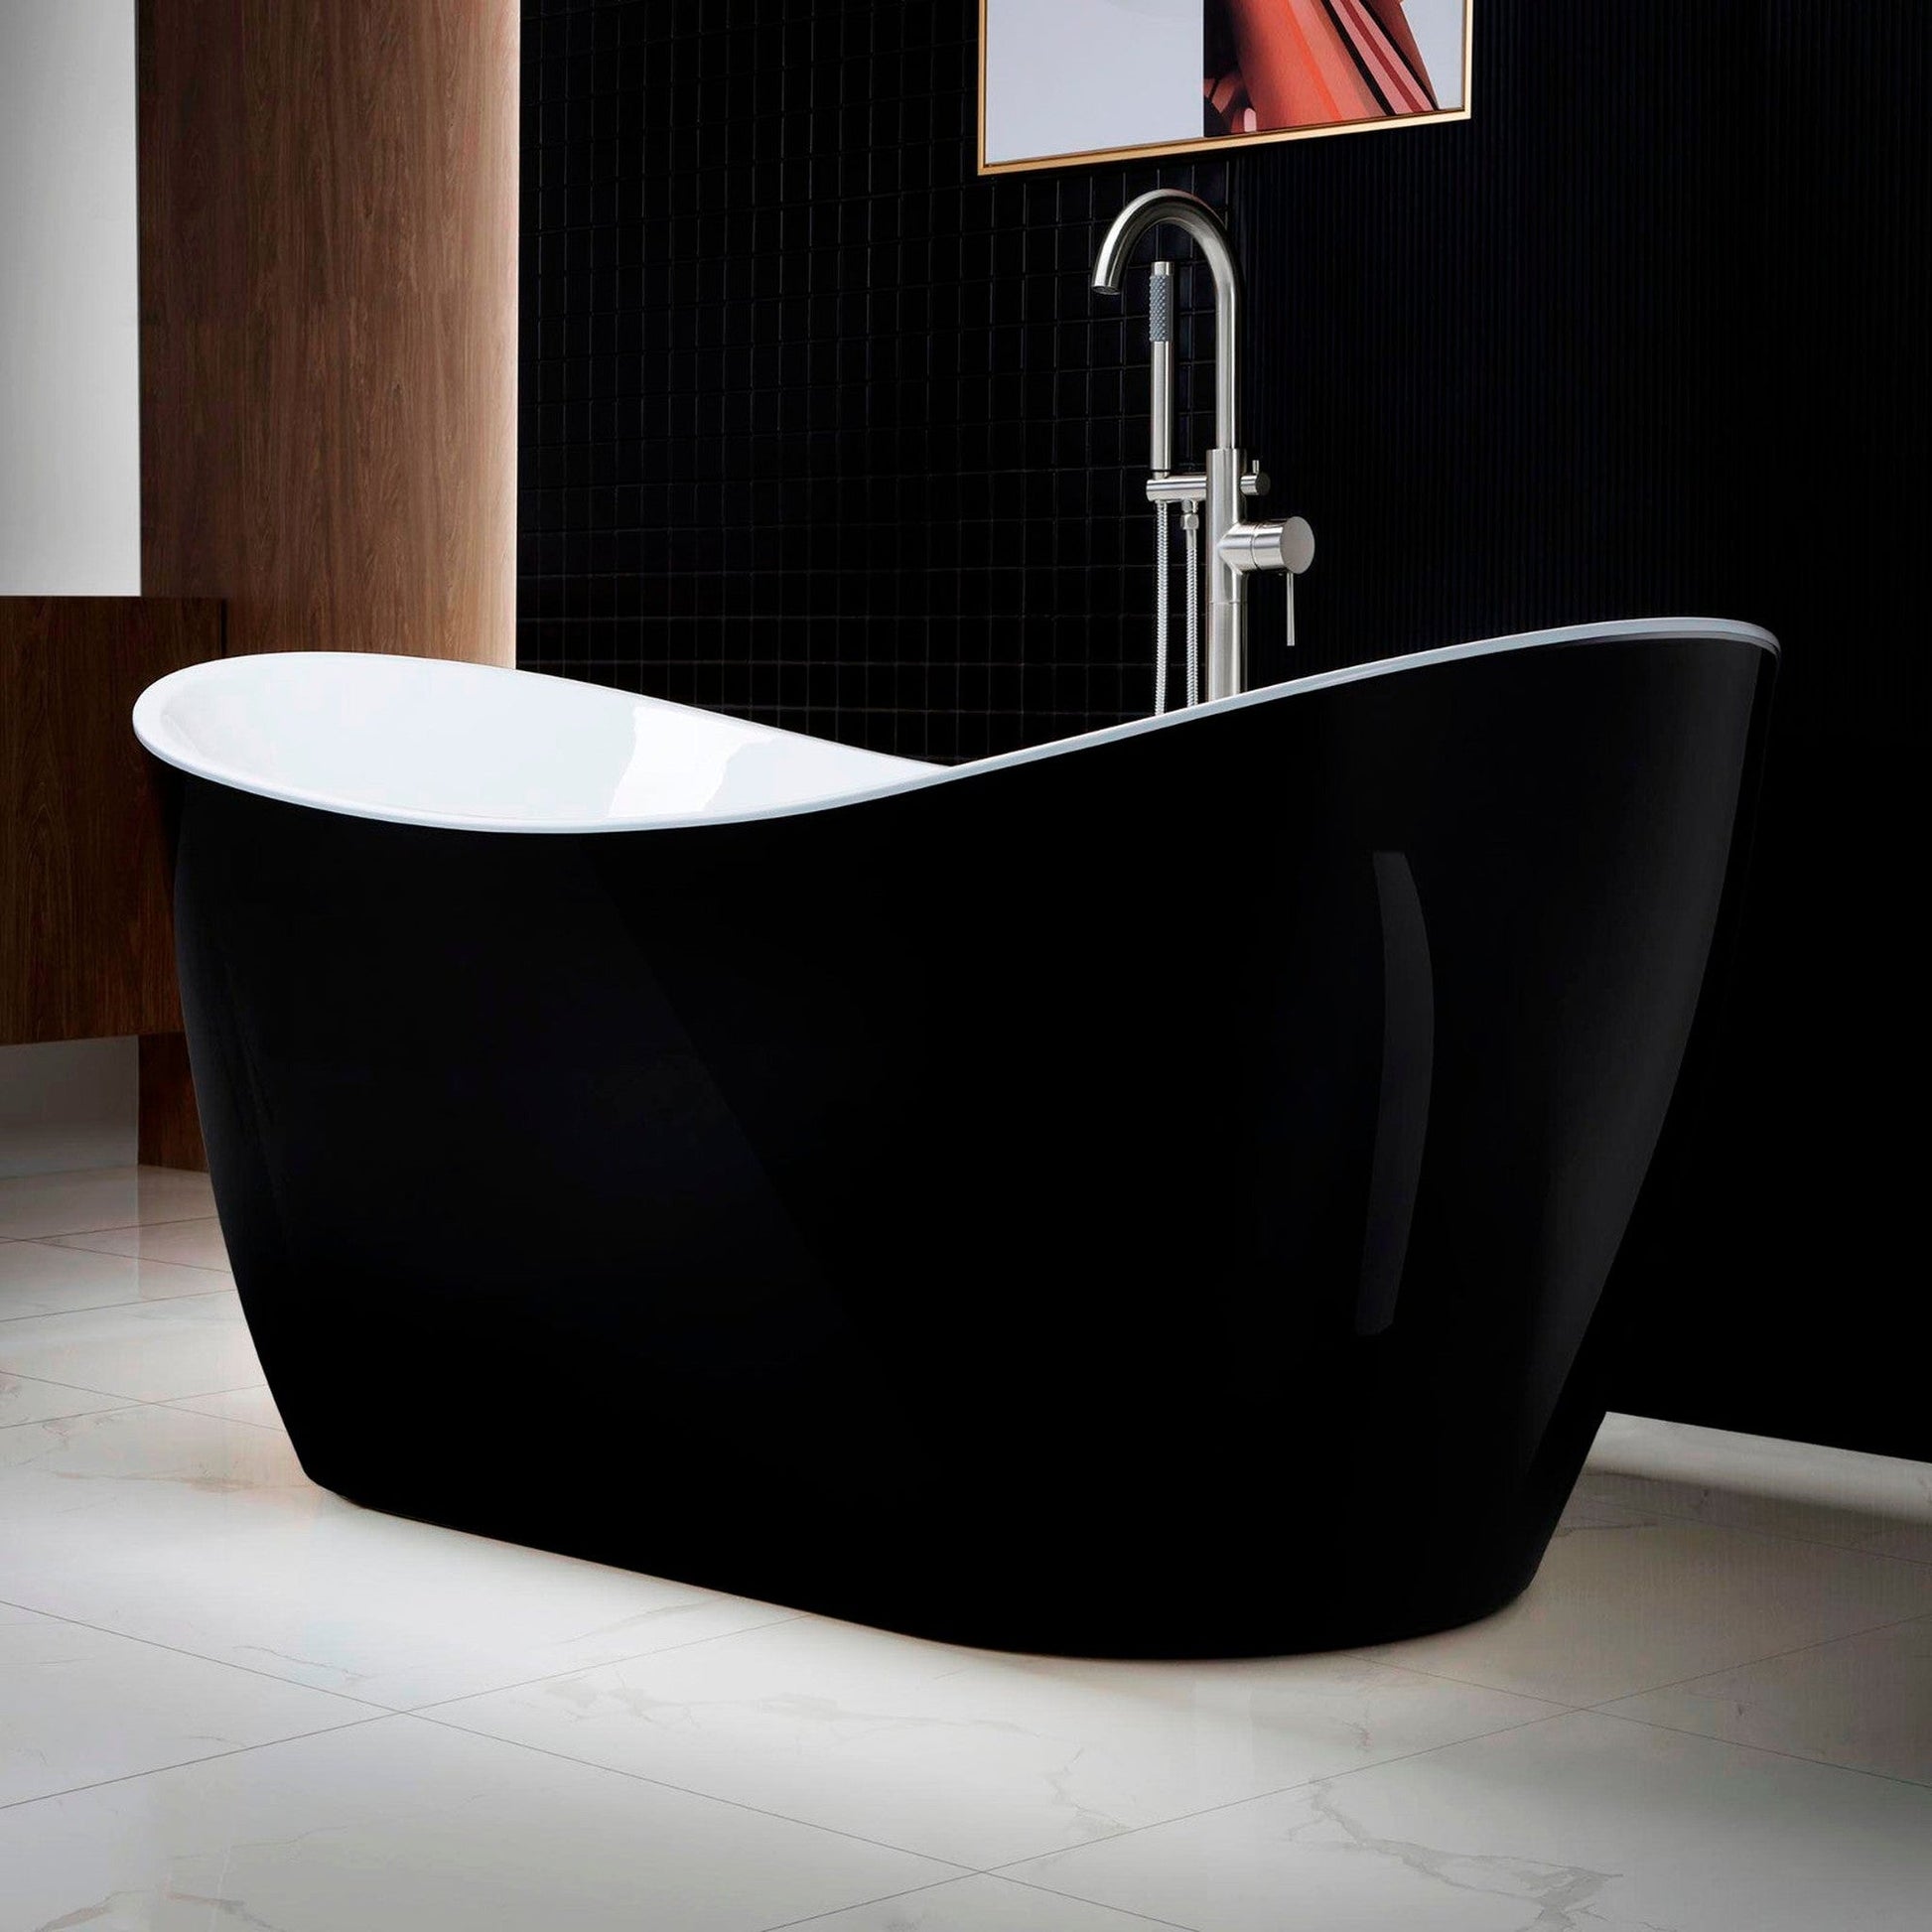 WoodBridge B1816 59" Black Acrylic Freestanding Soaking Bathtub With Brushed Nickel Drain, Overflow, F0070BNVT Tub Filler and Caddy Tray